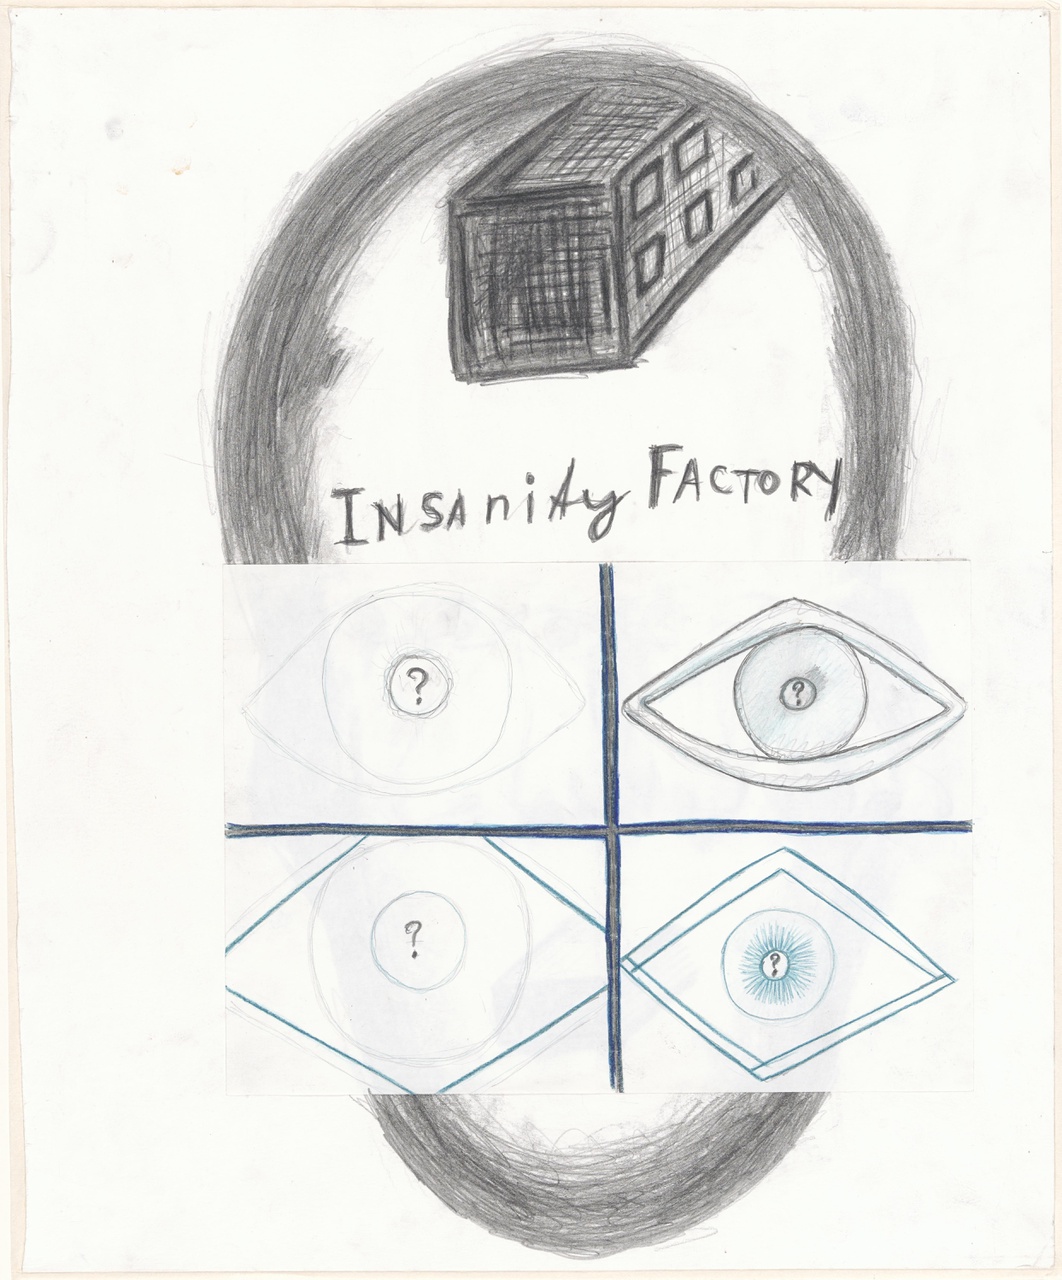 Insanity factory